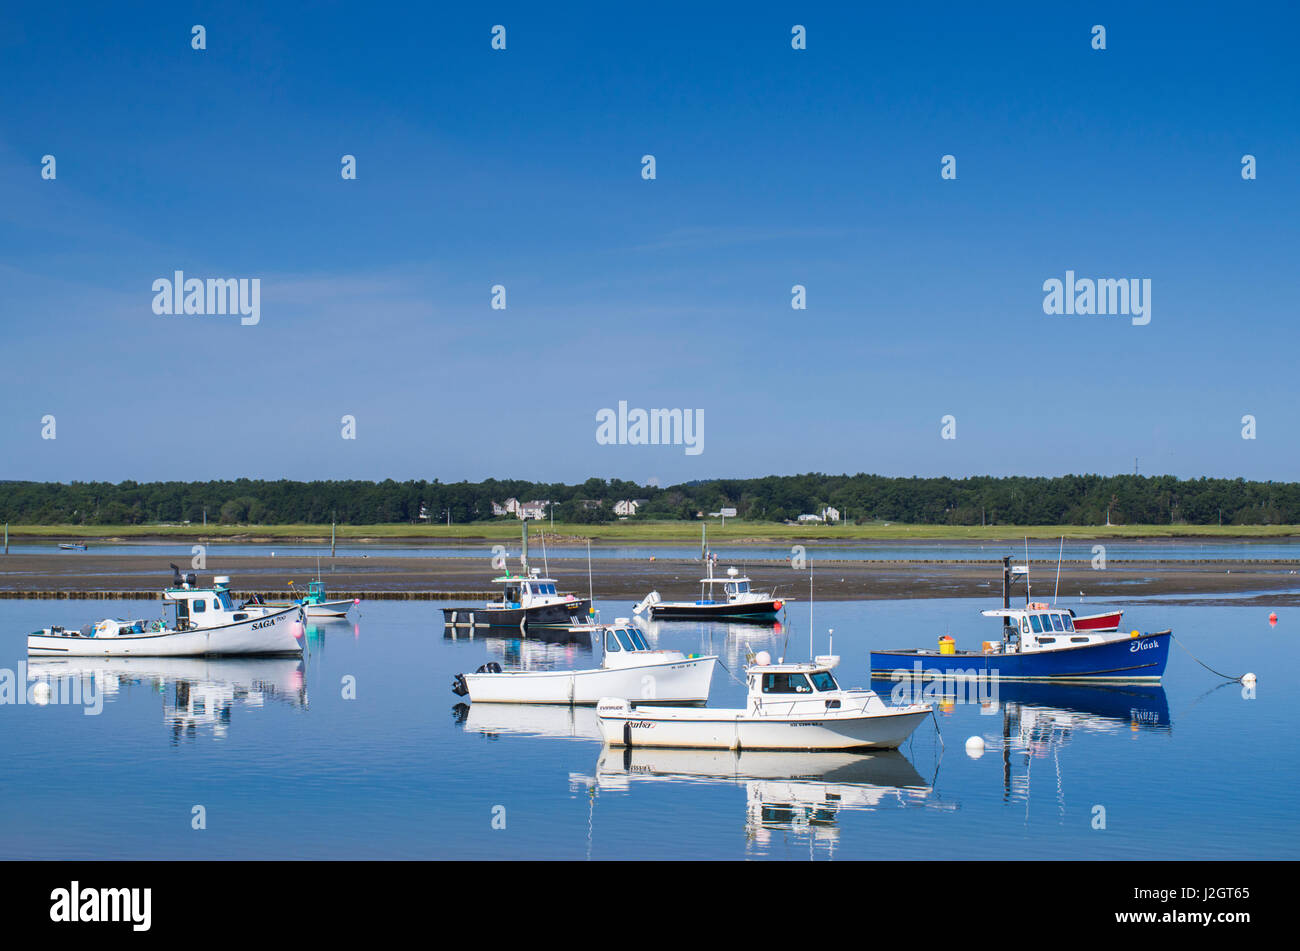 USA, New Hampshire, Seabrook, bateaux de pêche Banque D'Images